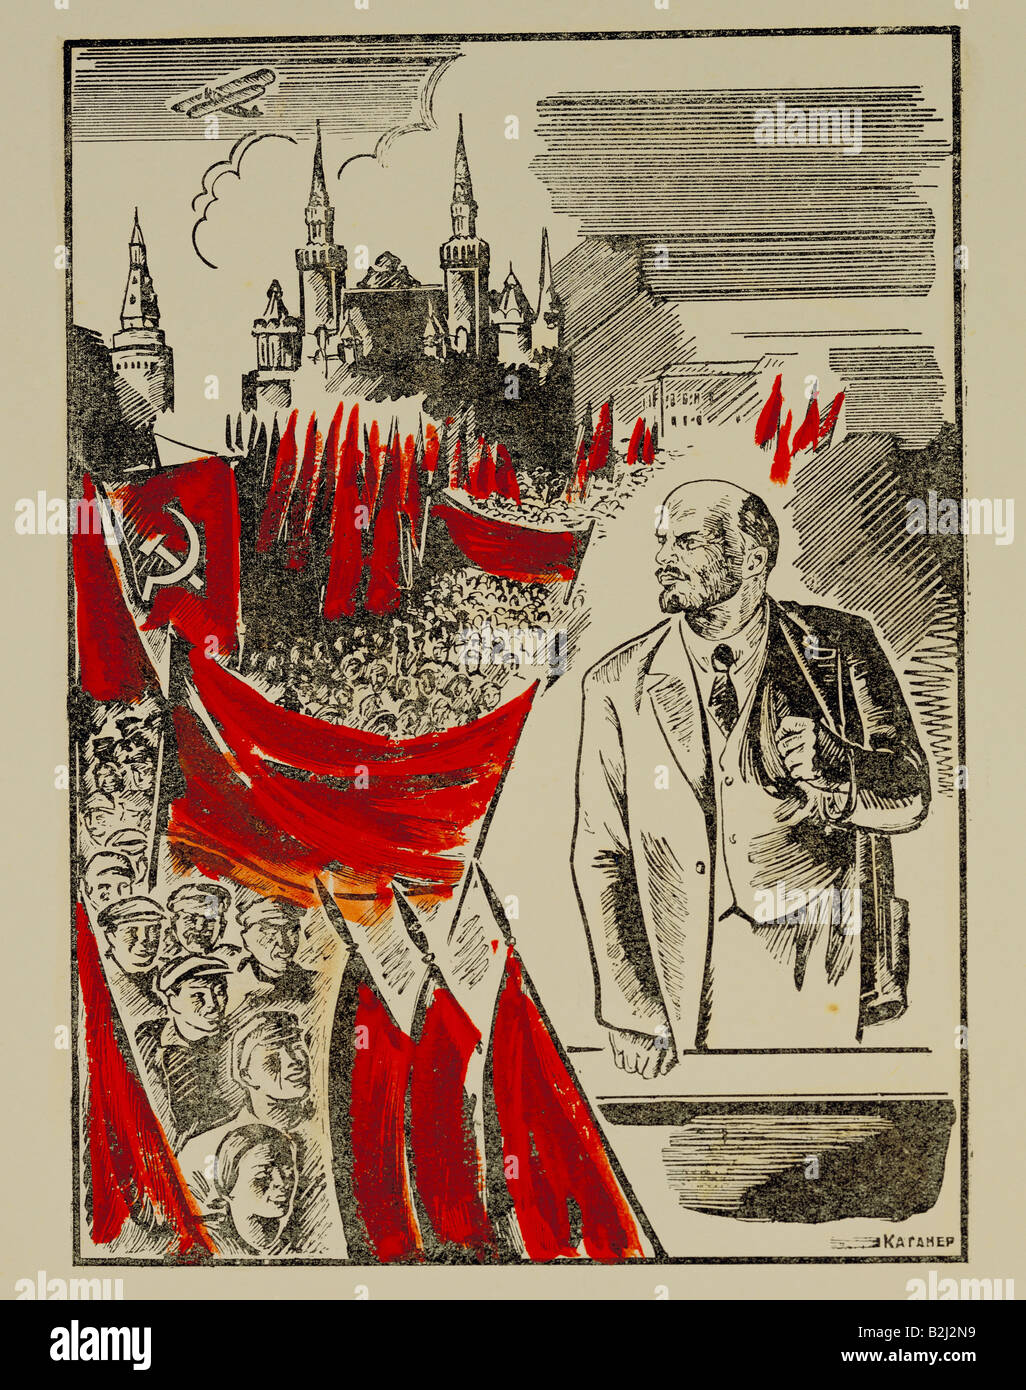 Lenin (Wladimir Iljich Uljanow), 22.4.1870 - 21.1.1924, russischer Politiker, Vorsitzender des Rates der Völkerkommisare 26.10.1917 - 21.7.1924, halbe Länge, Illustration, UdSSR, ca. 1928, Privatsammlung, Stockfoto